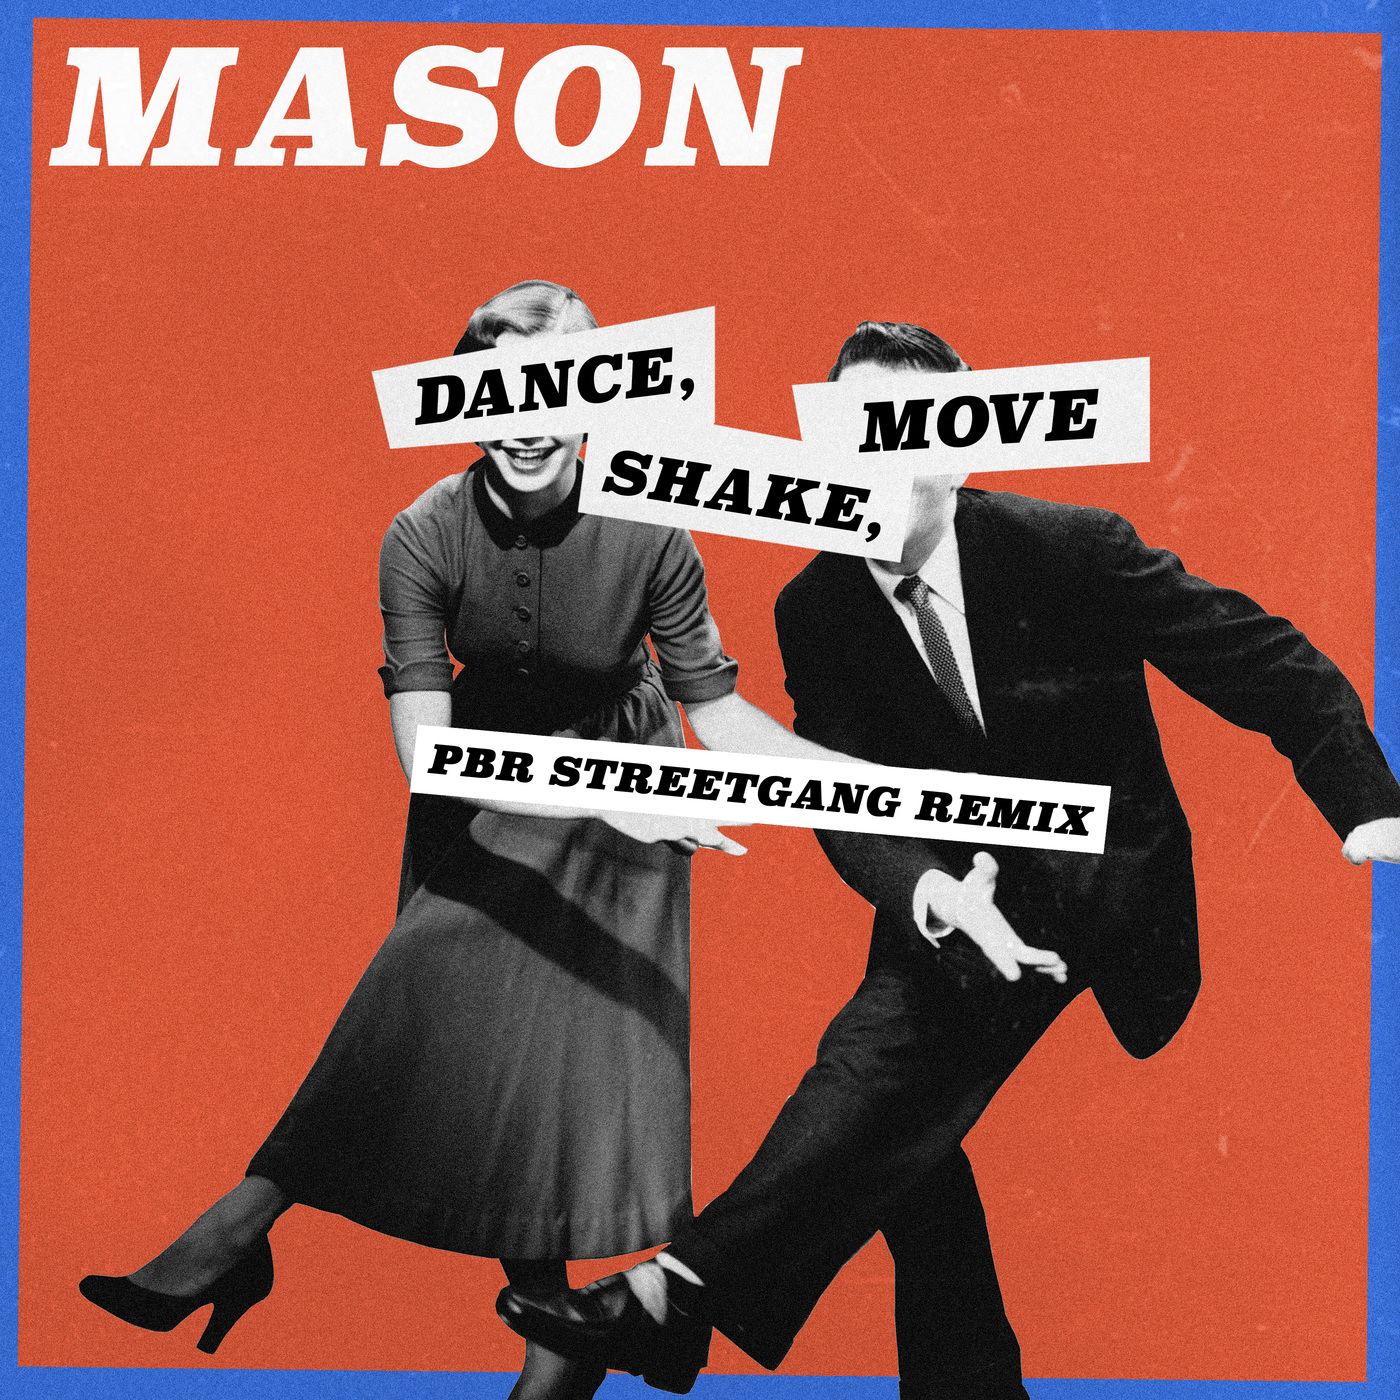 Mason - Dance, Shake, Move (PBR Streetgang Remix) / Skint Records